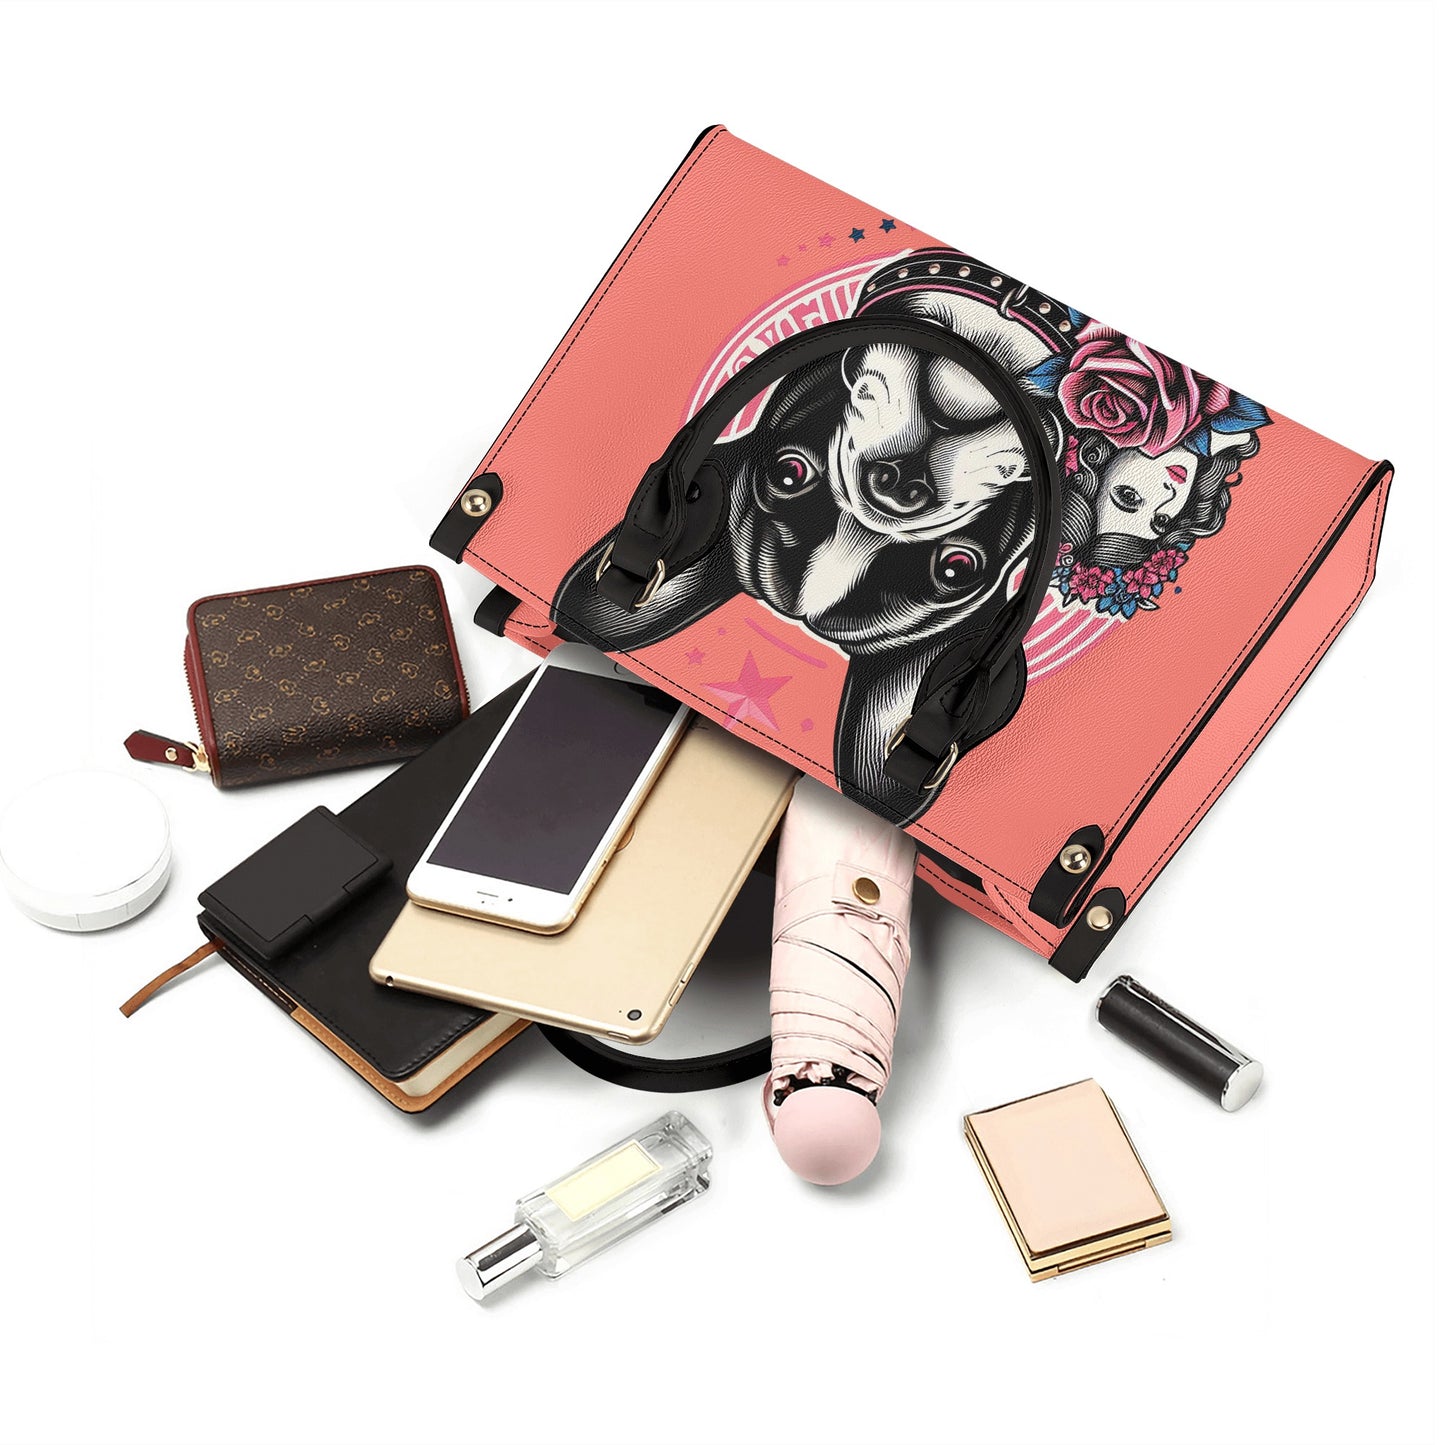 Lily - Luxury Women Handbag